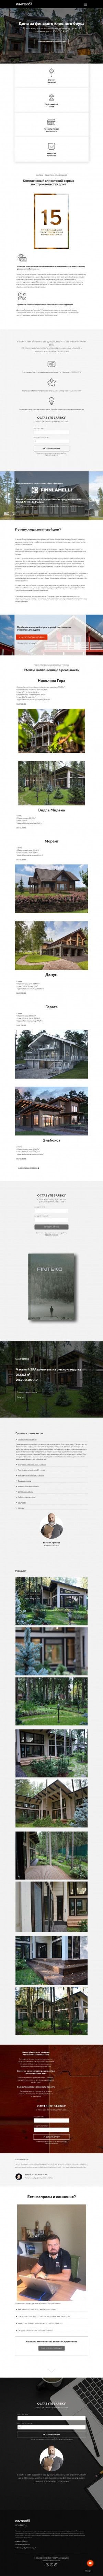 Предпросмотр для www.finteko.com — Финтеко